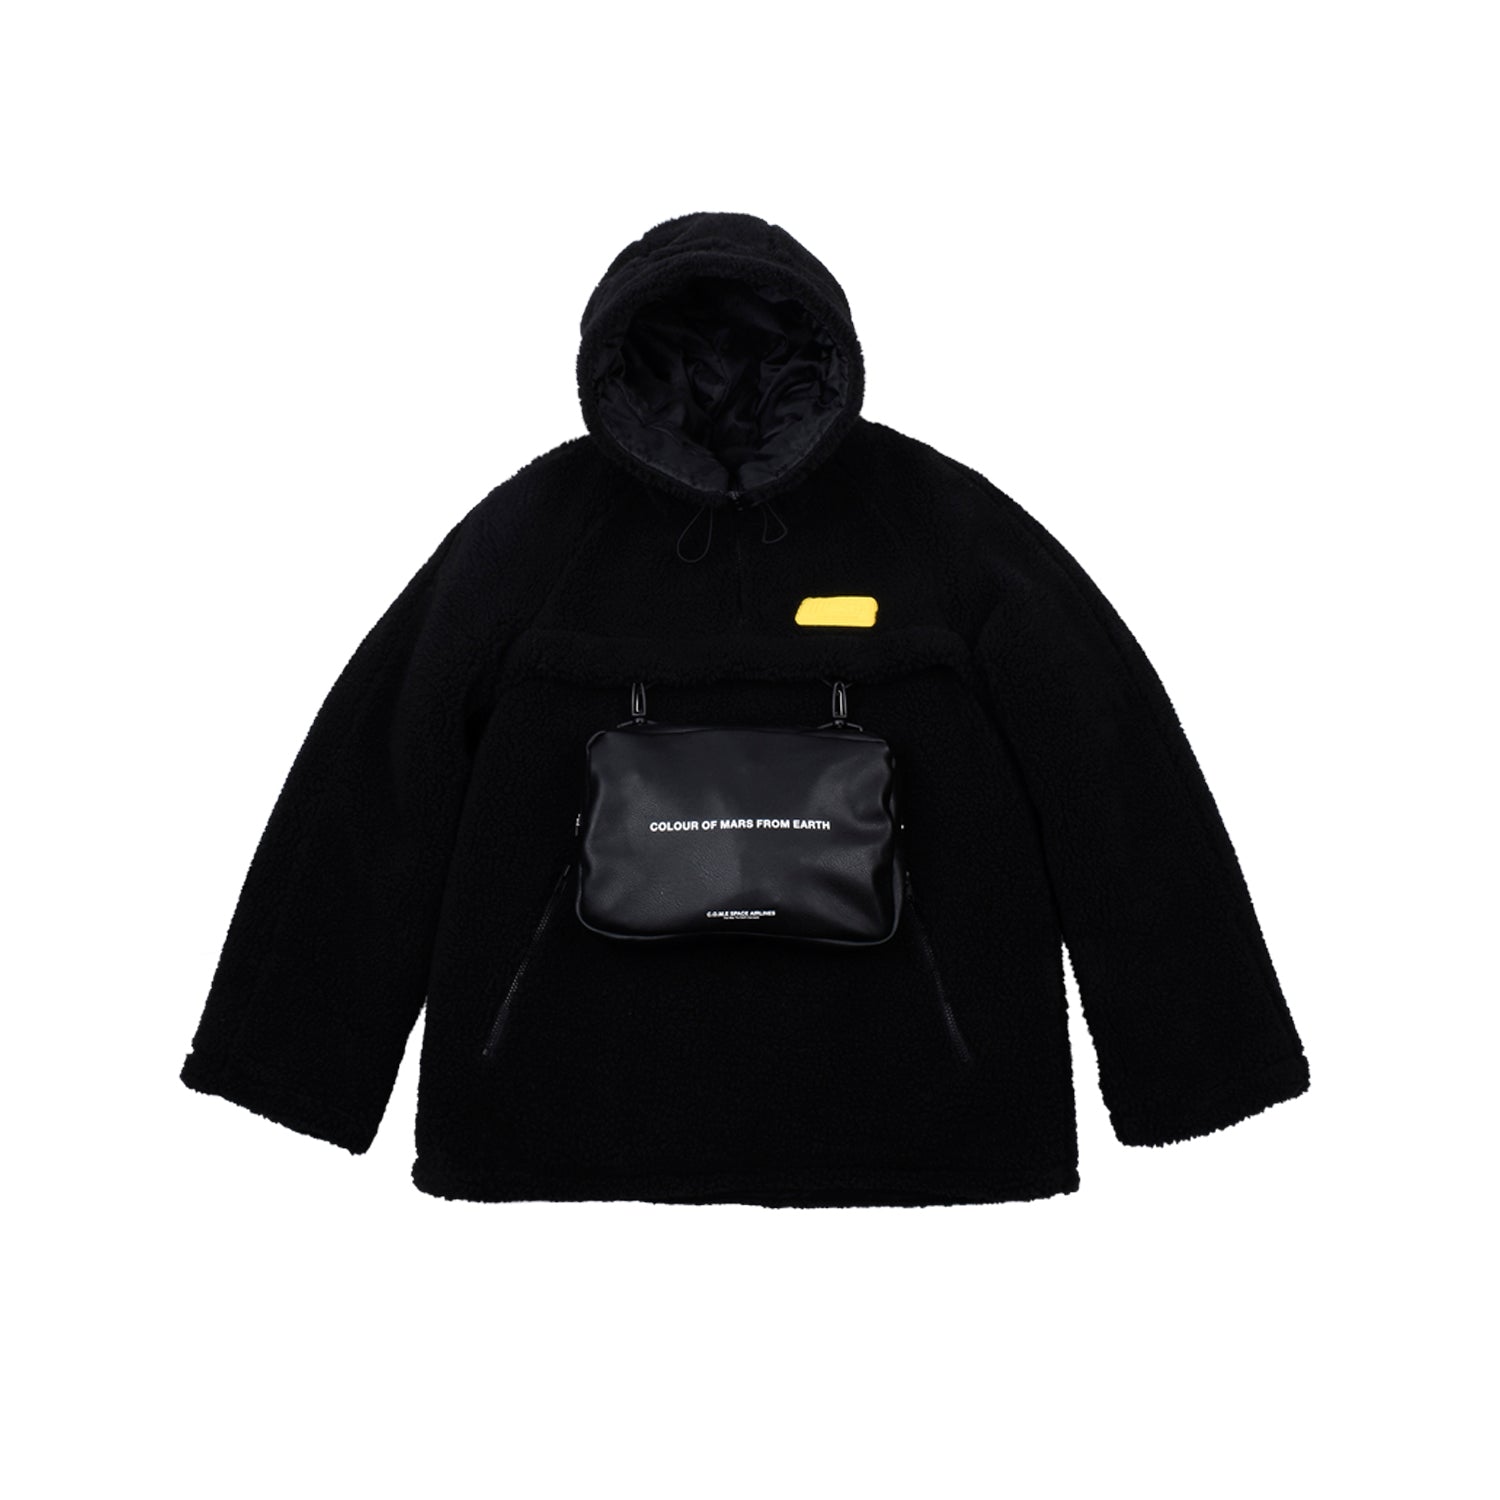 EMTバッグアノラックフェイクシャーリングコート[UNISEX] EMT Bag Anorak Faux-Shearling Coat (Black)